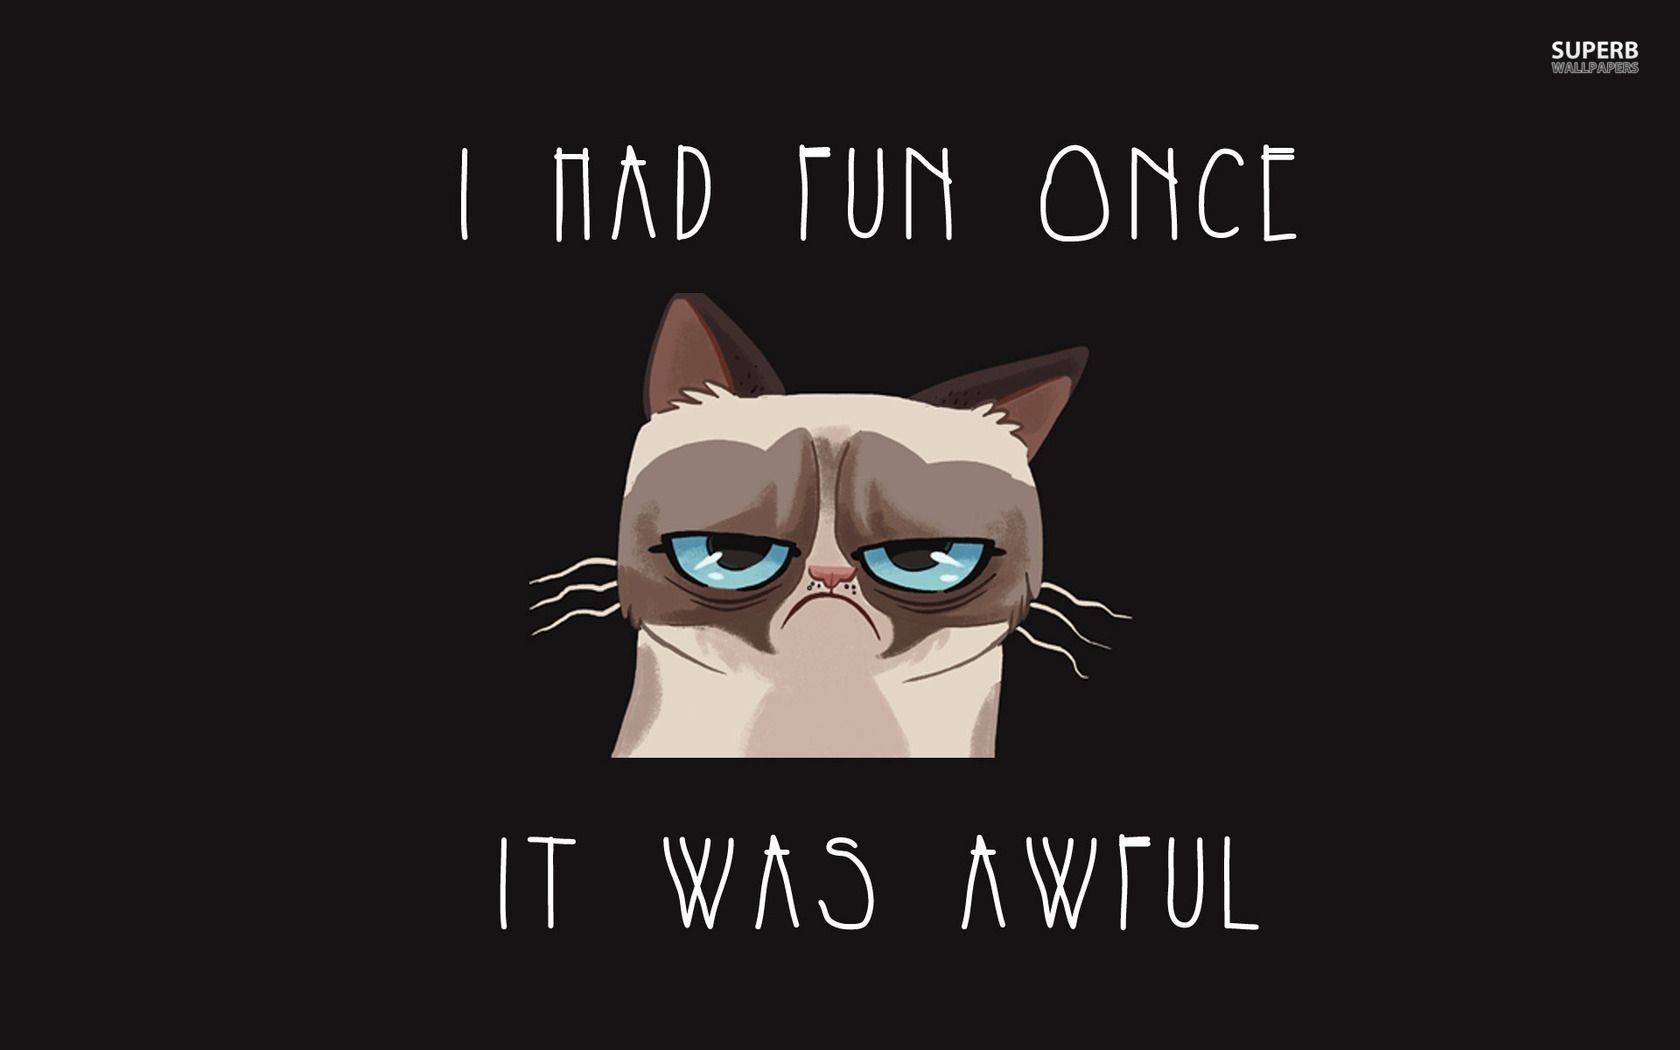 Grumpy Cat wallpaper. Grumpy cat cartoon, Grumpy cat quotes, Grumpy cat meme